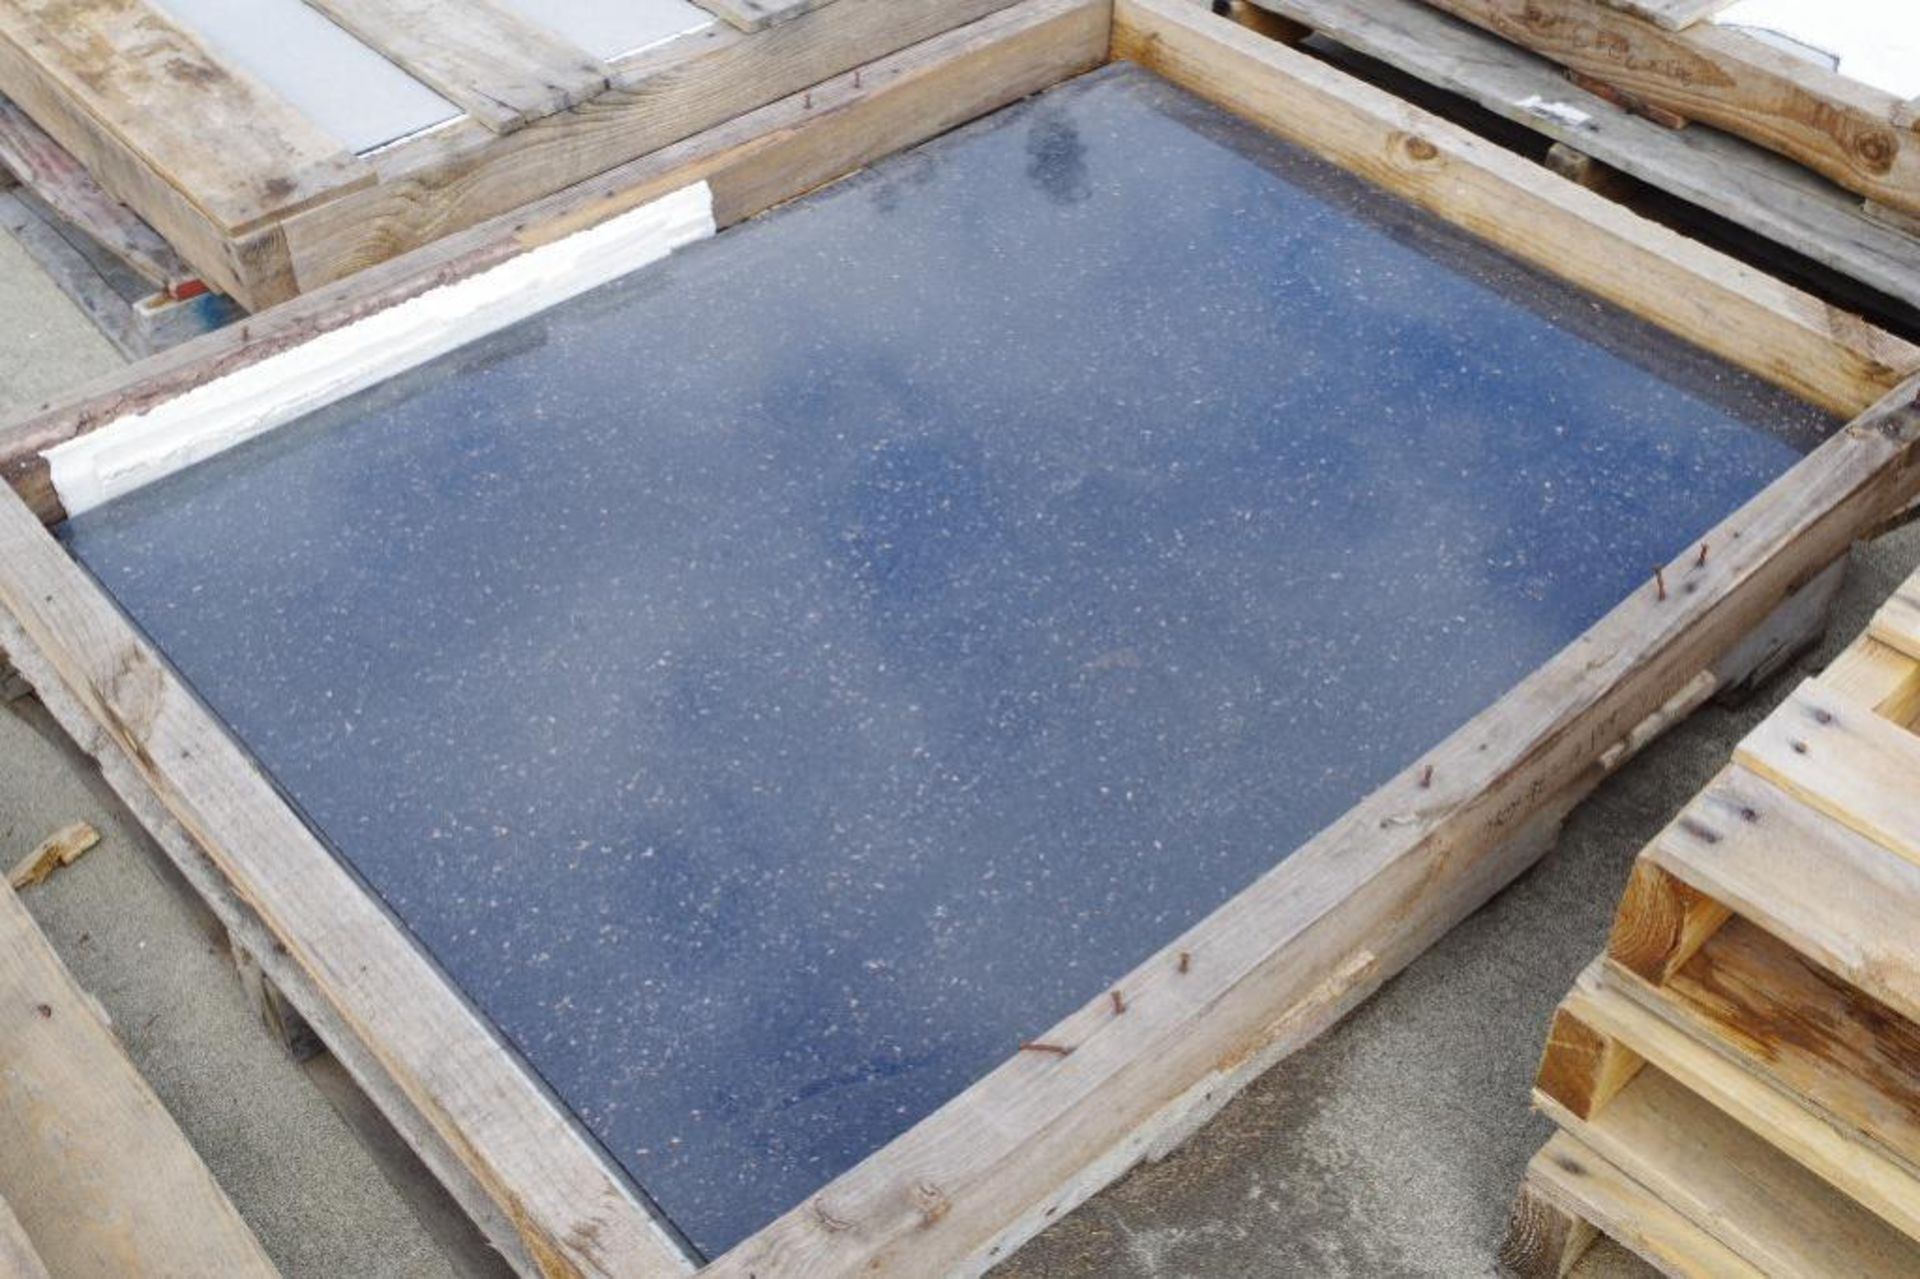 [1] NEW Granite Table Tops 48" x 36" (1 crate of 1)